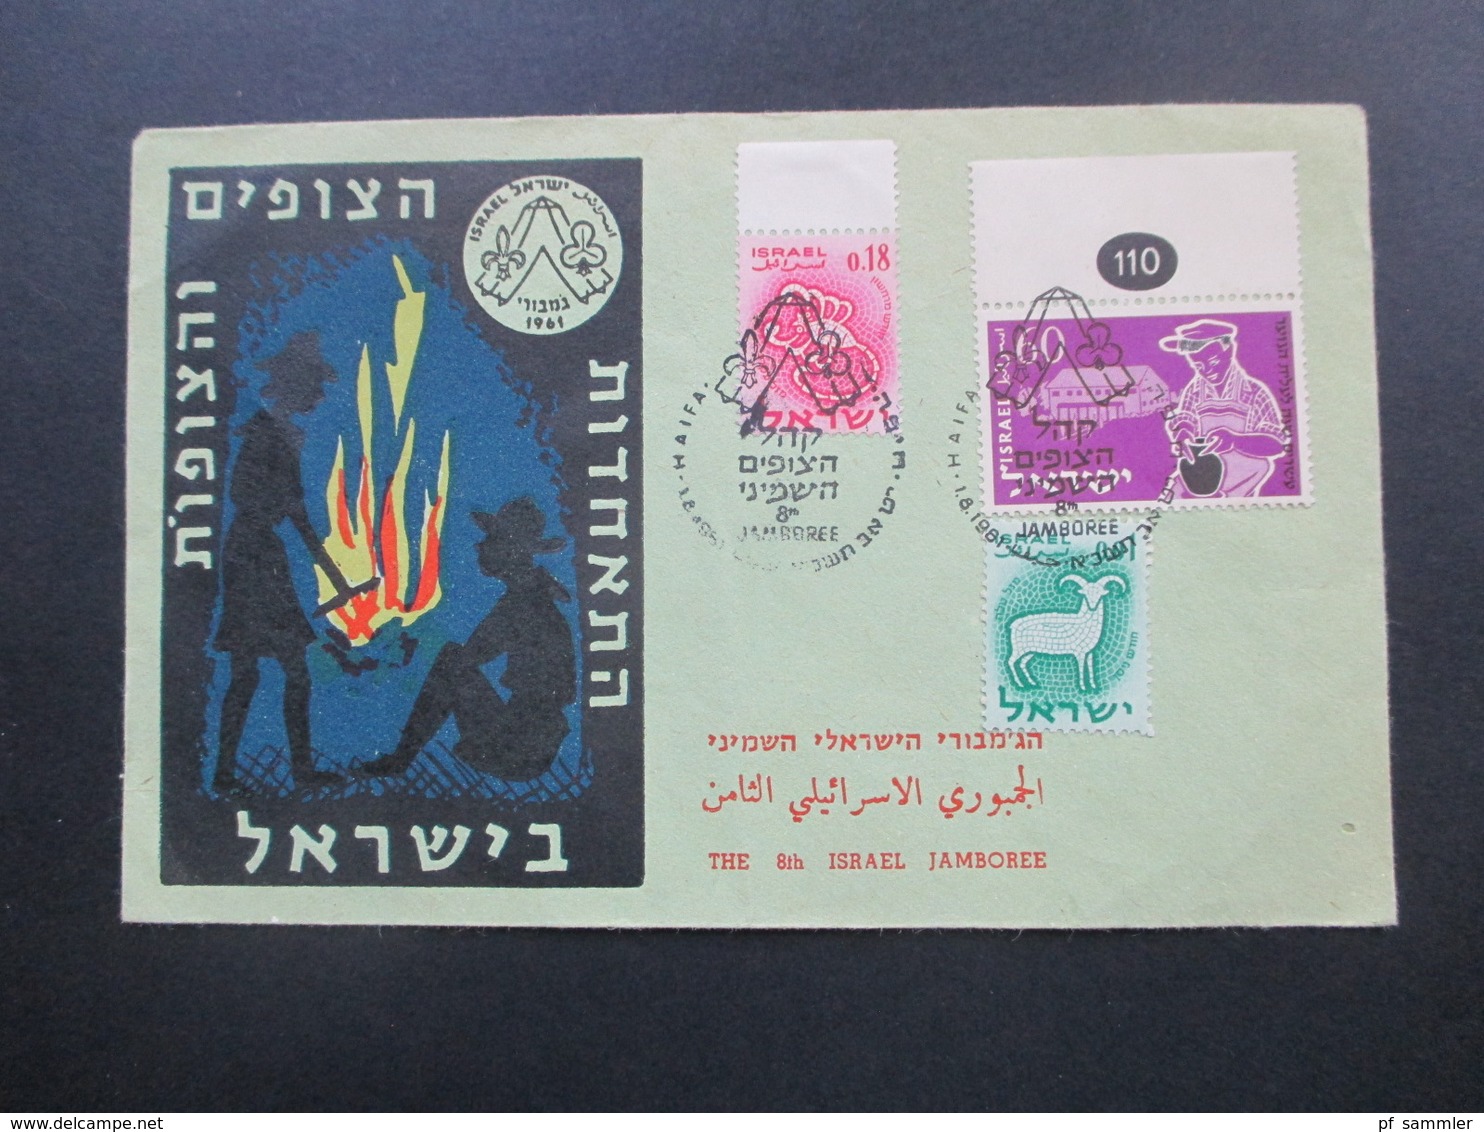 Israel 2 Sonderbelege 8th Israel Jamboree. Pfadfinder. SST / Marken Vom Bogenrand. Lagerfeuer / Zelt / Boy Scouts 1961 - Covers & Documents